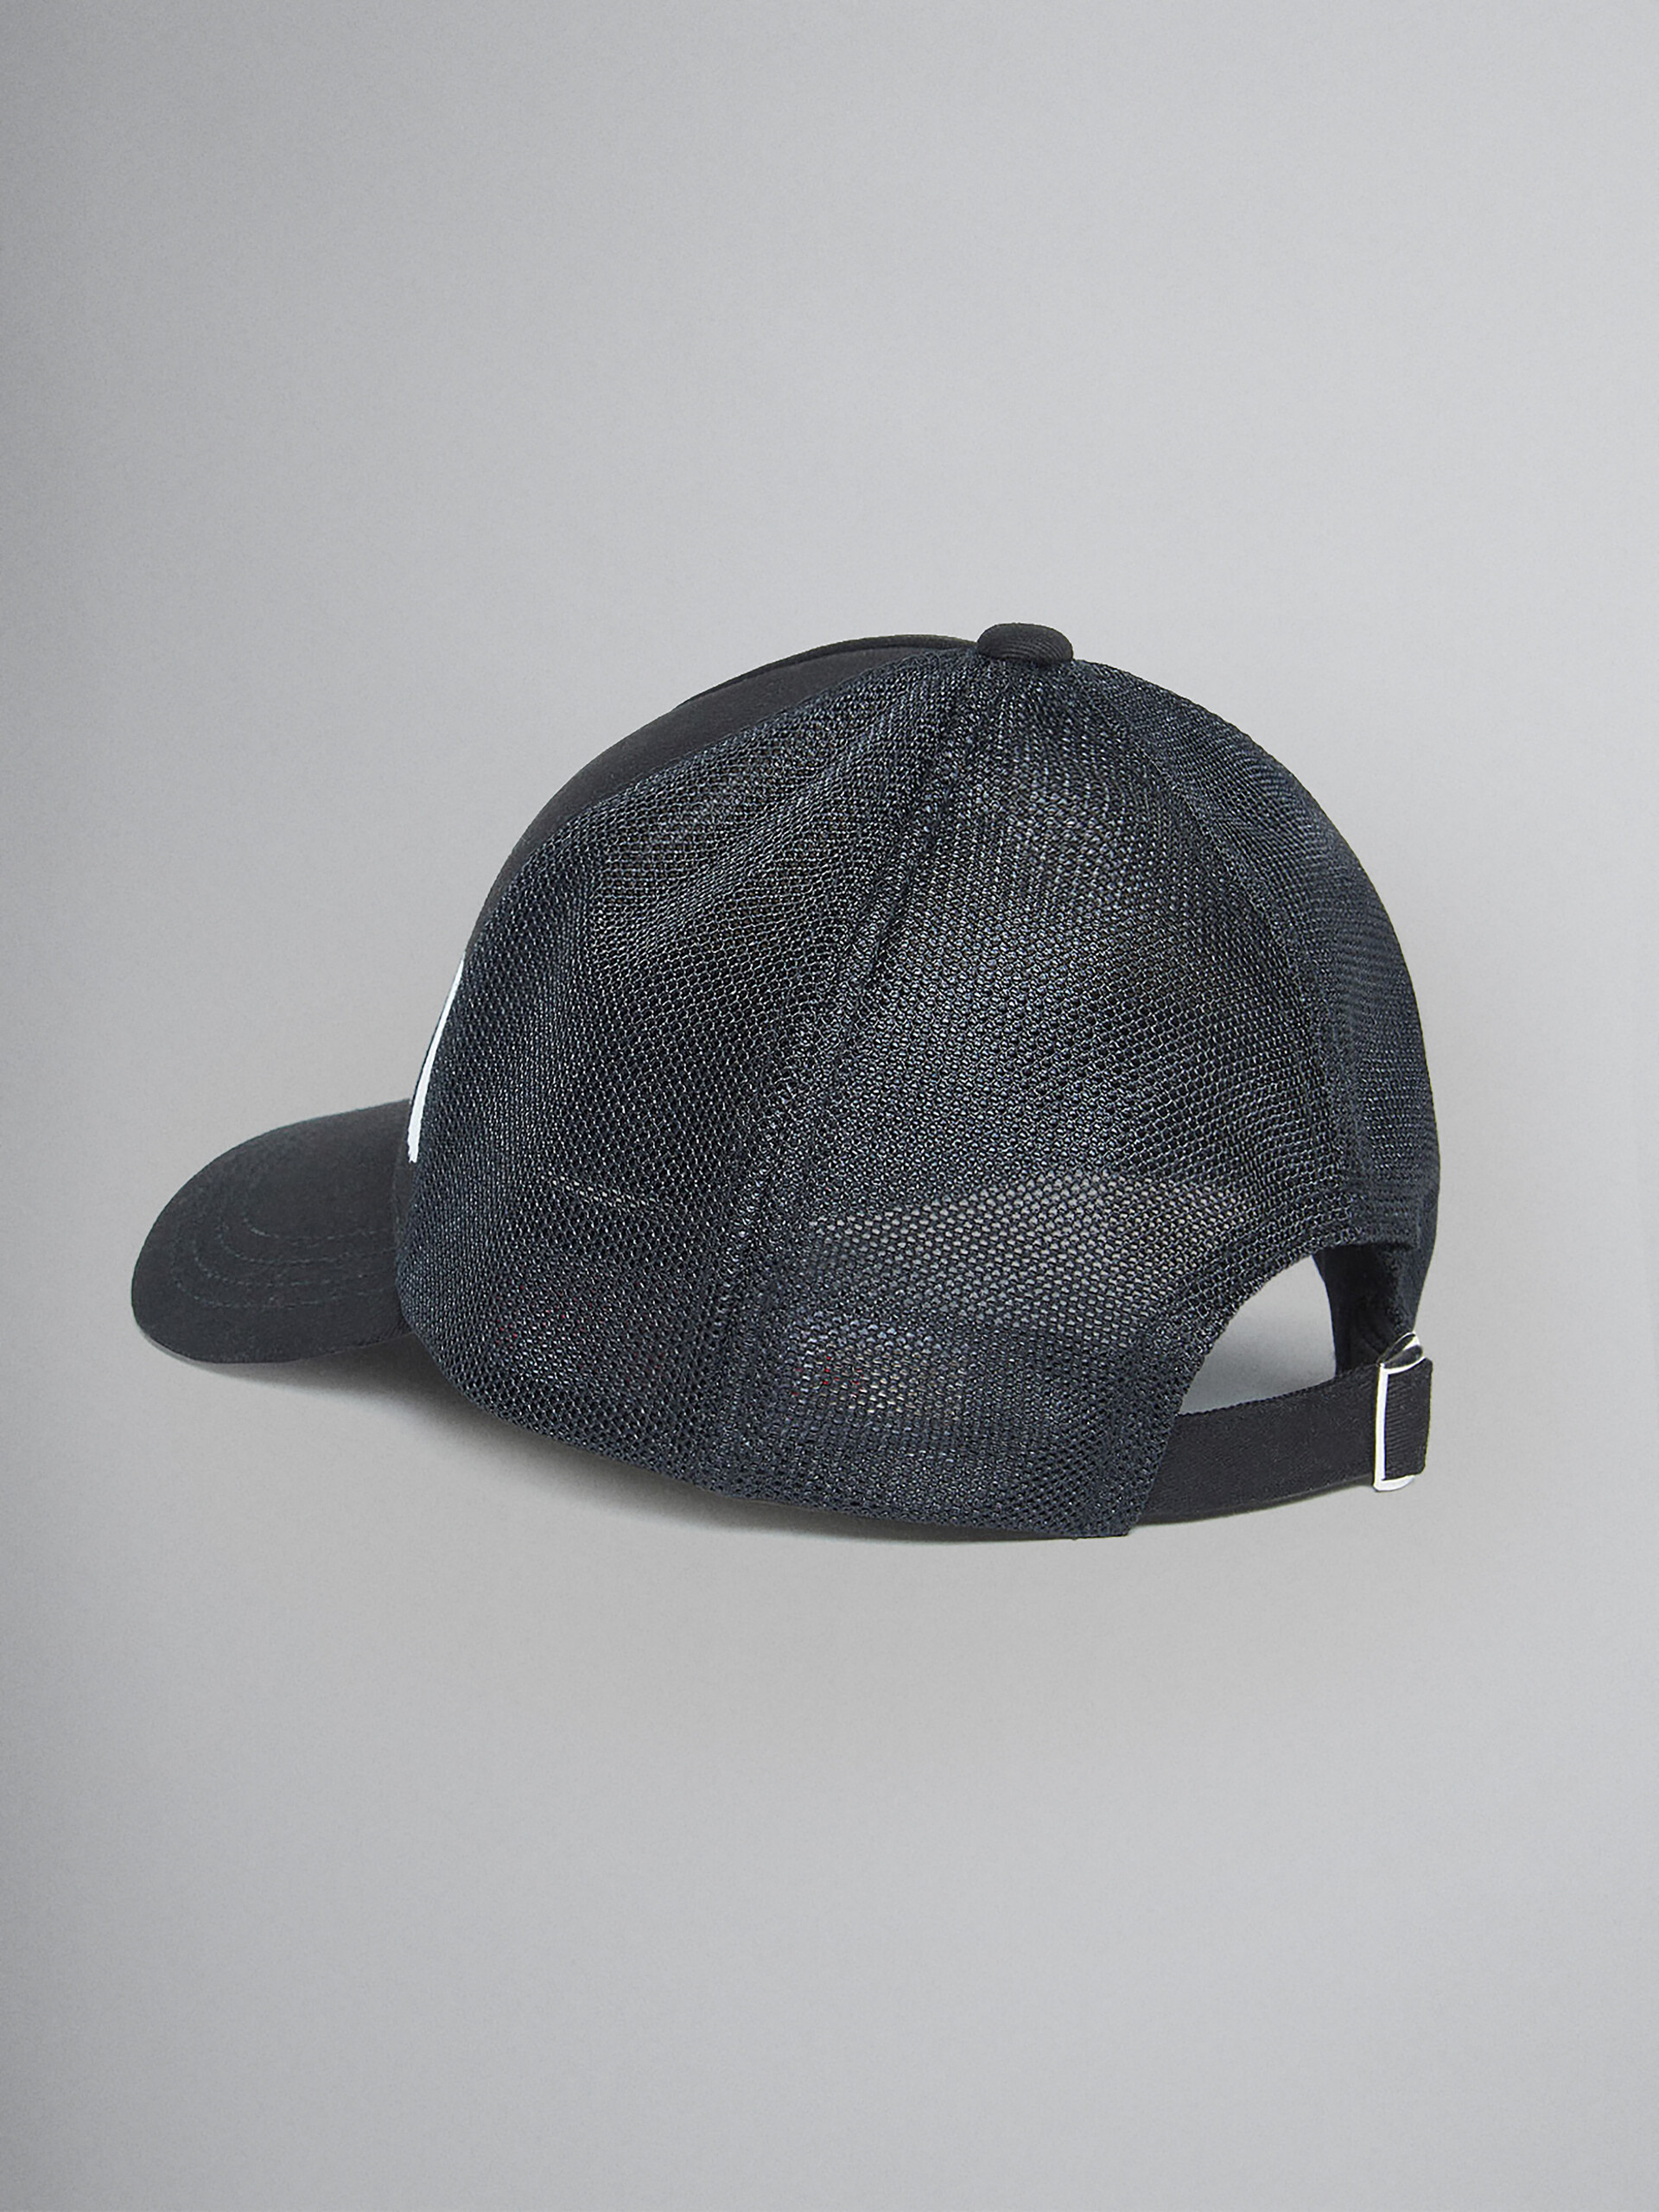 Black trucker hat with Brush logo - Caps - Image 2